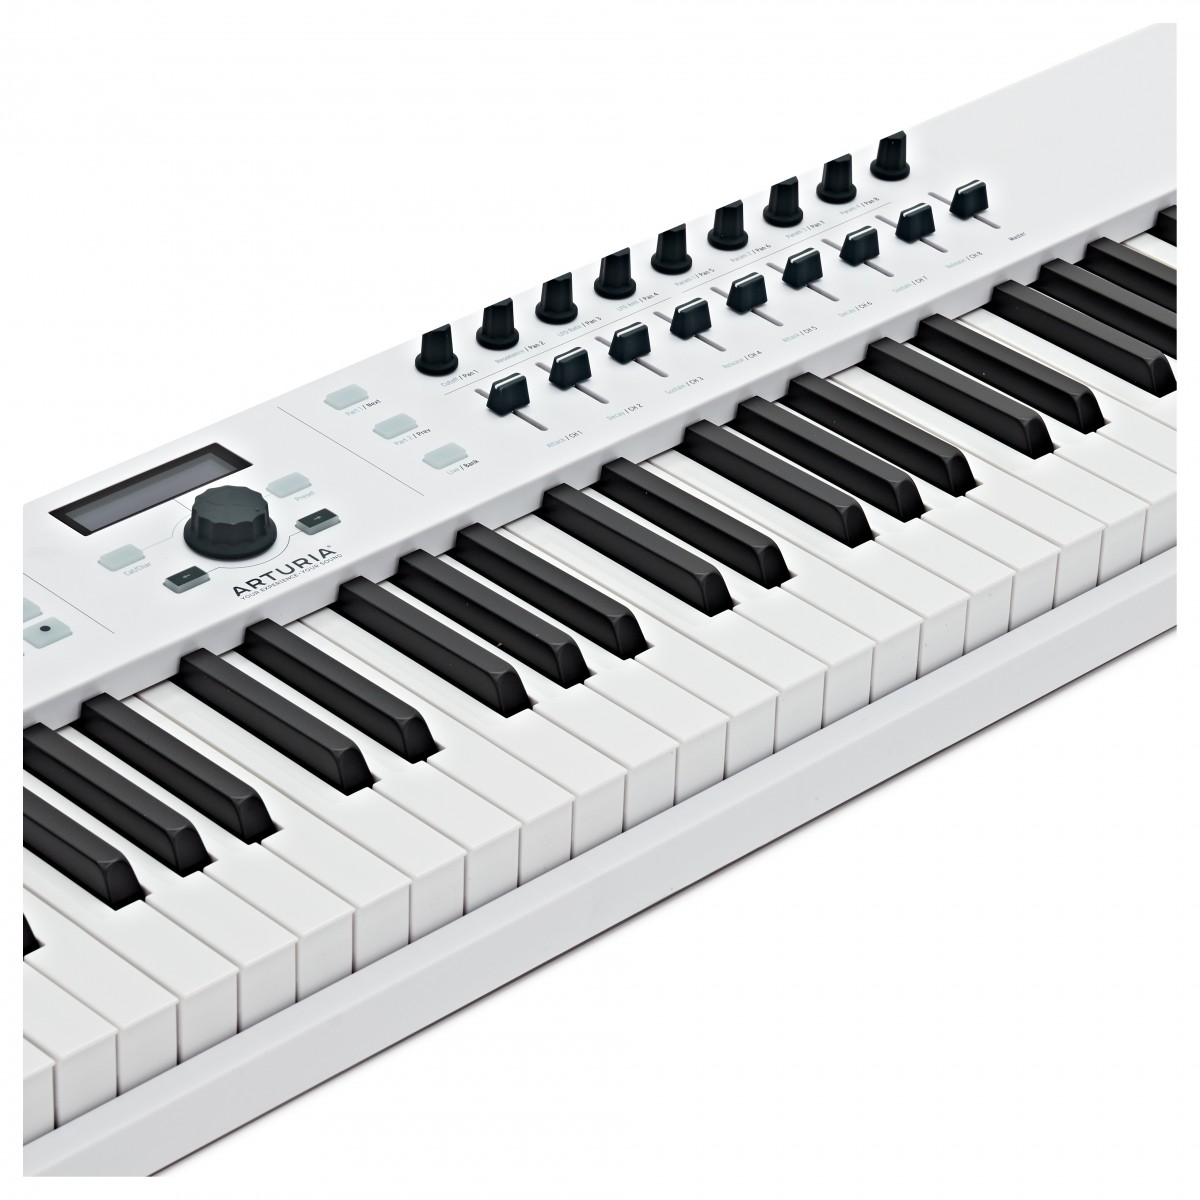 MIDI клавиатура Arturia KeyLab Essential 88